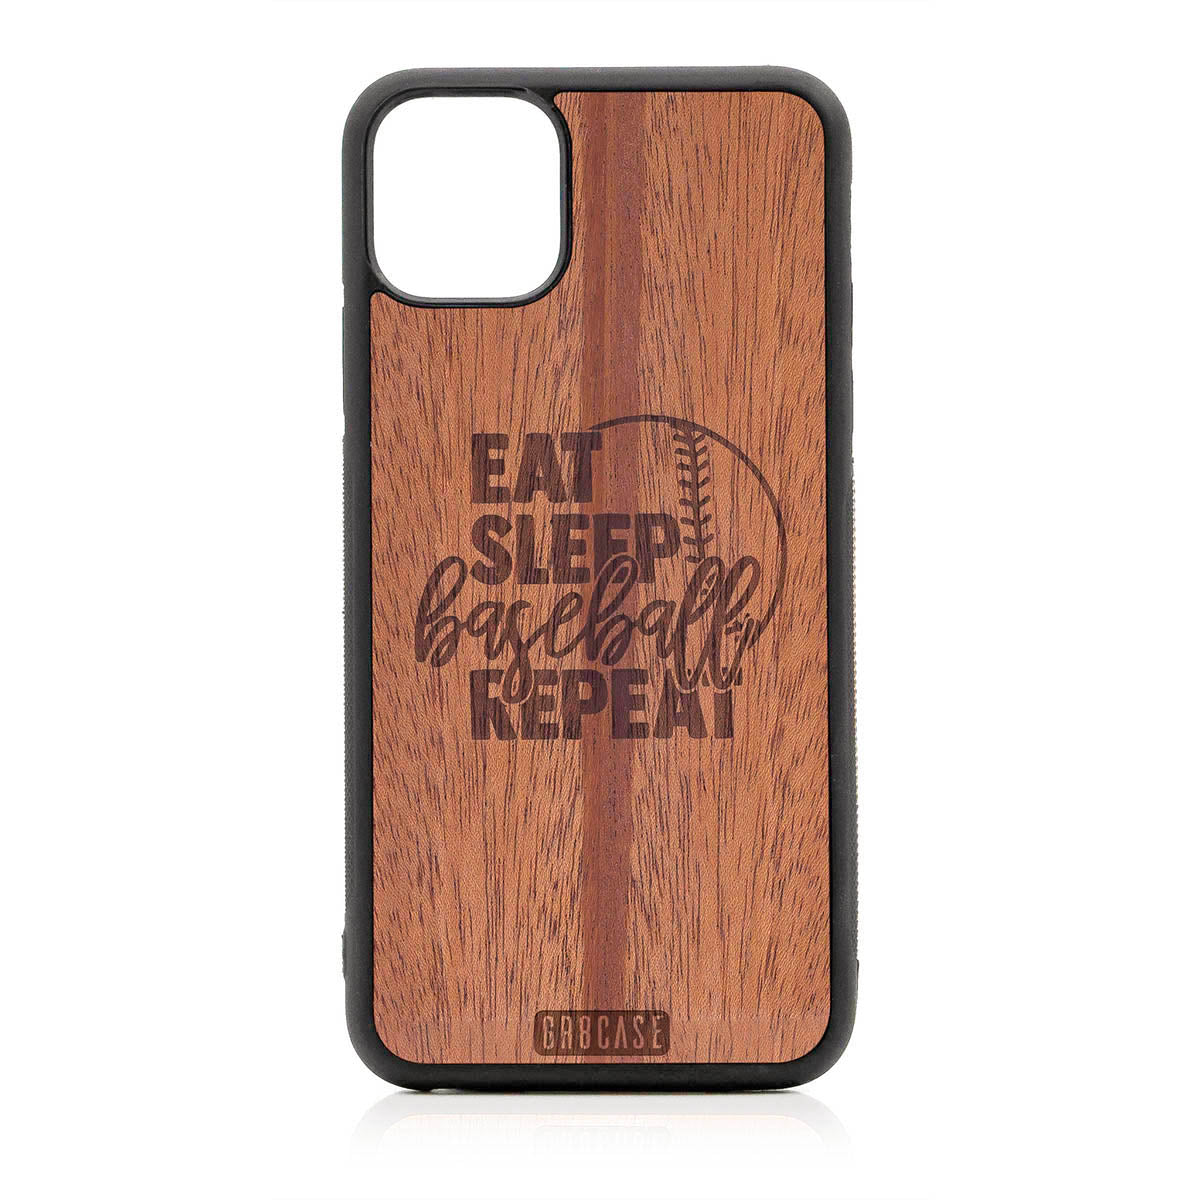 Eat Sleep Baseball Repeat Design Wood Case For iPhone 11 Pro Max